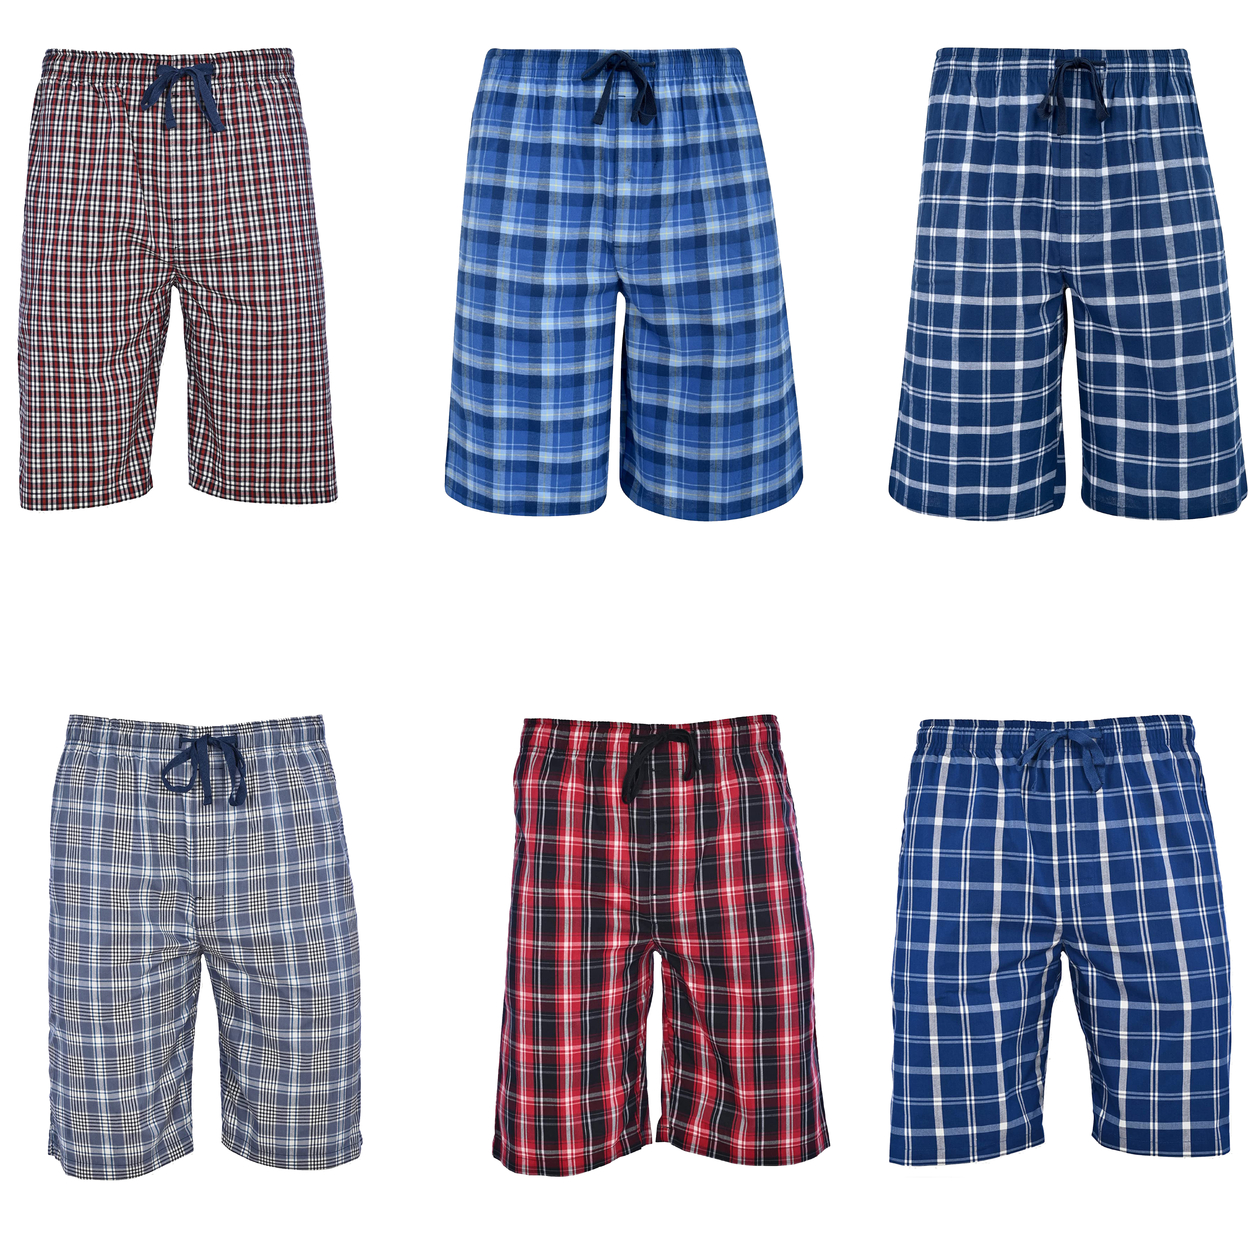 2-Pack: Men's Ultra Soft Plaid Lounge Pajama Sleep Wear Shorts - Black & Grey, Large